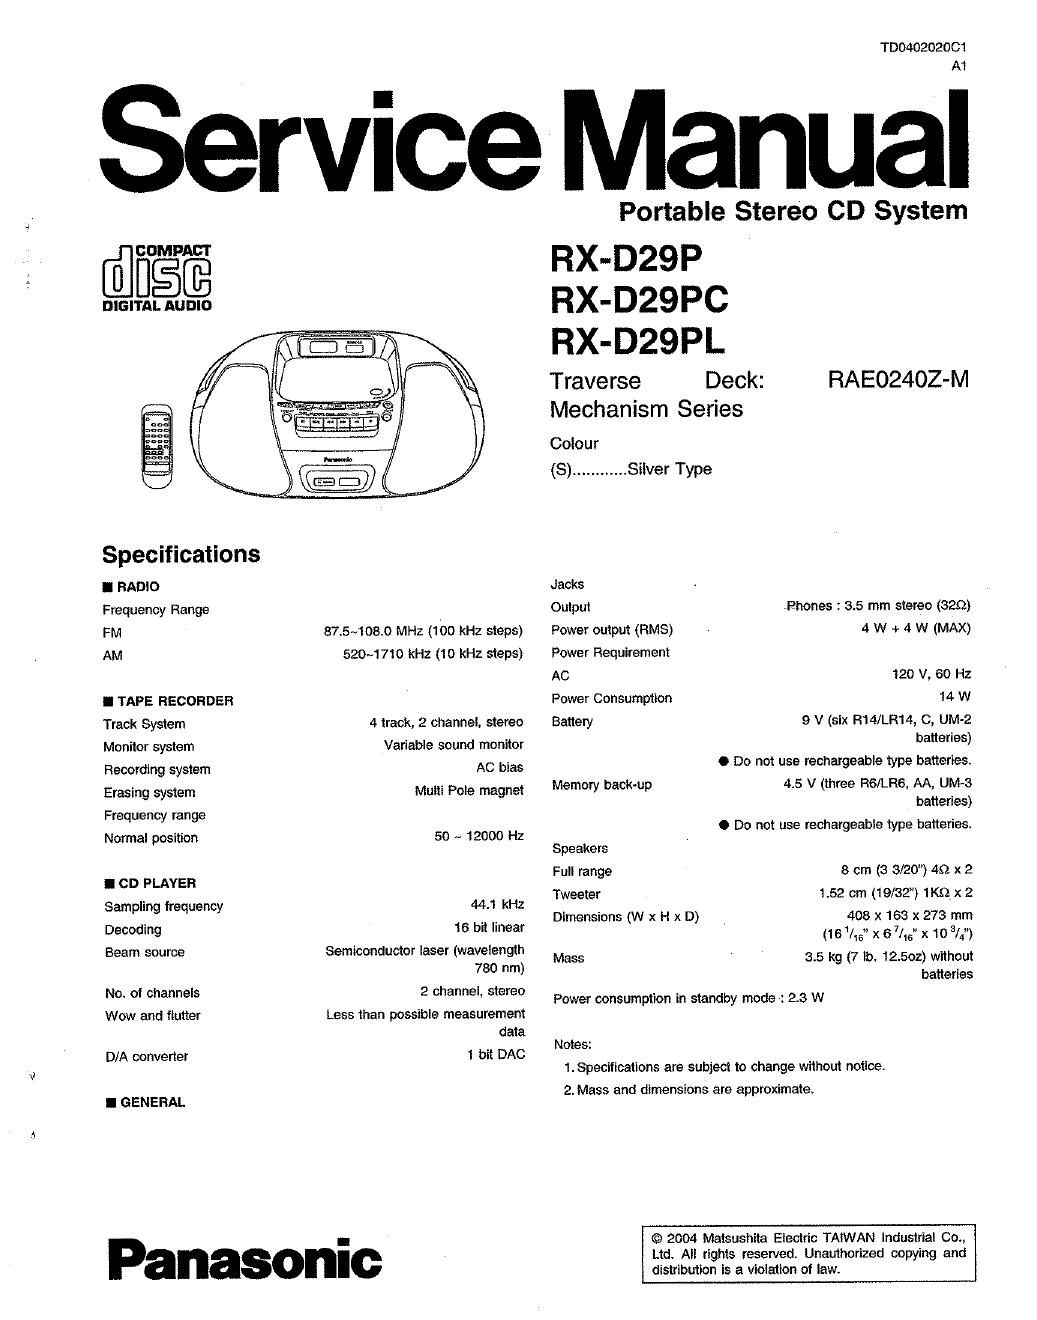 panasonic rx d 29 service manual